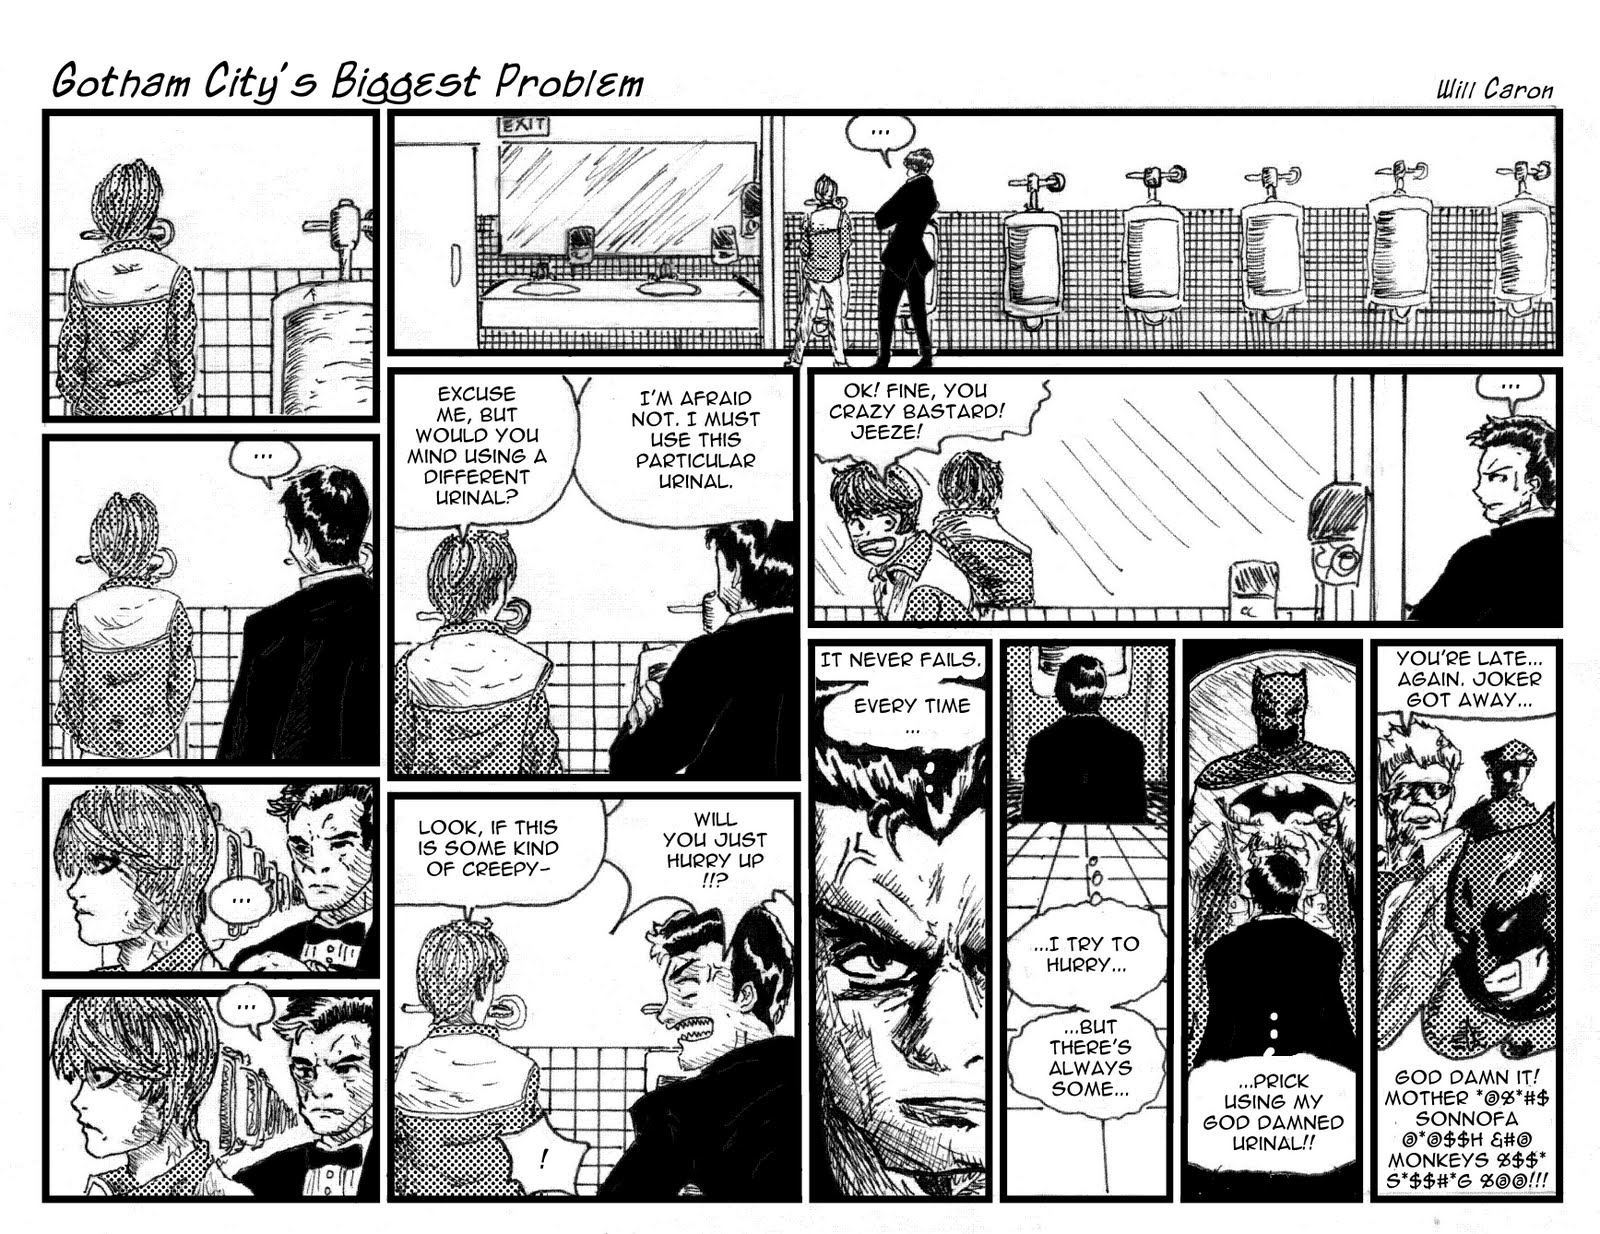 [53.+Gotham+City's+Biggest+Problem+final.jpg]